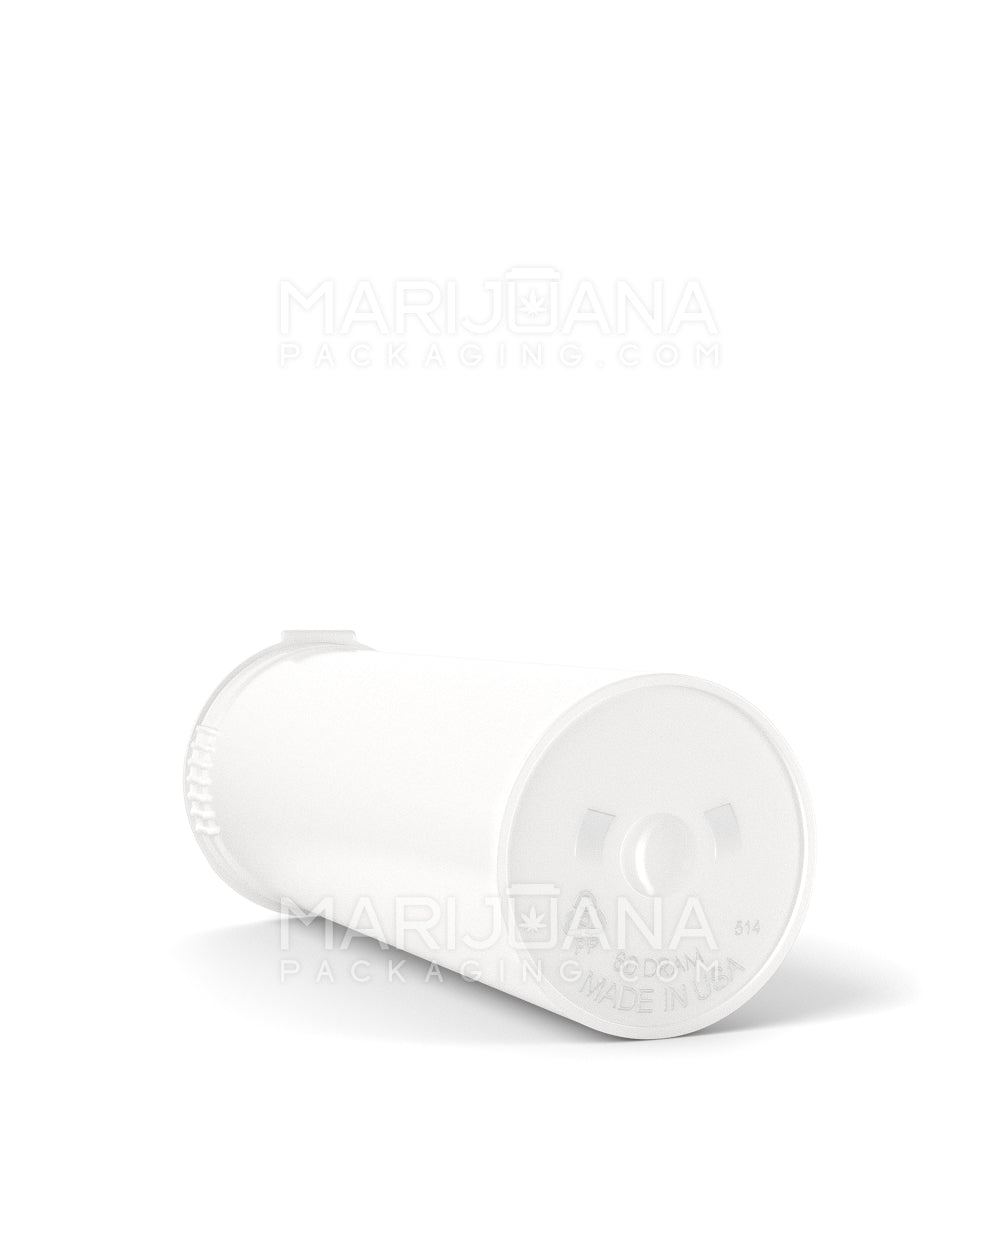 POLLEN GEAR | Child Resistant Kush Opaque White Pop Top Bottles | 60dr - 14g - 128 Count - 4